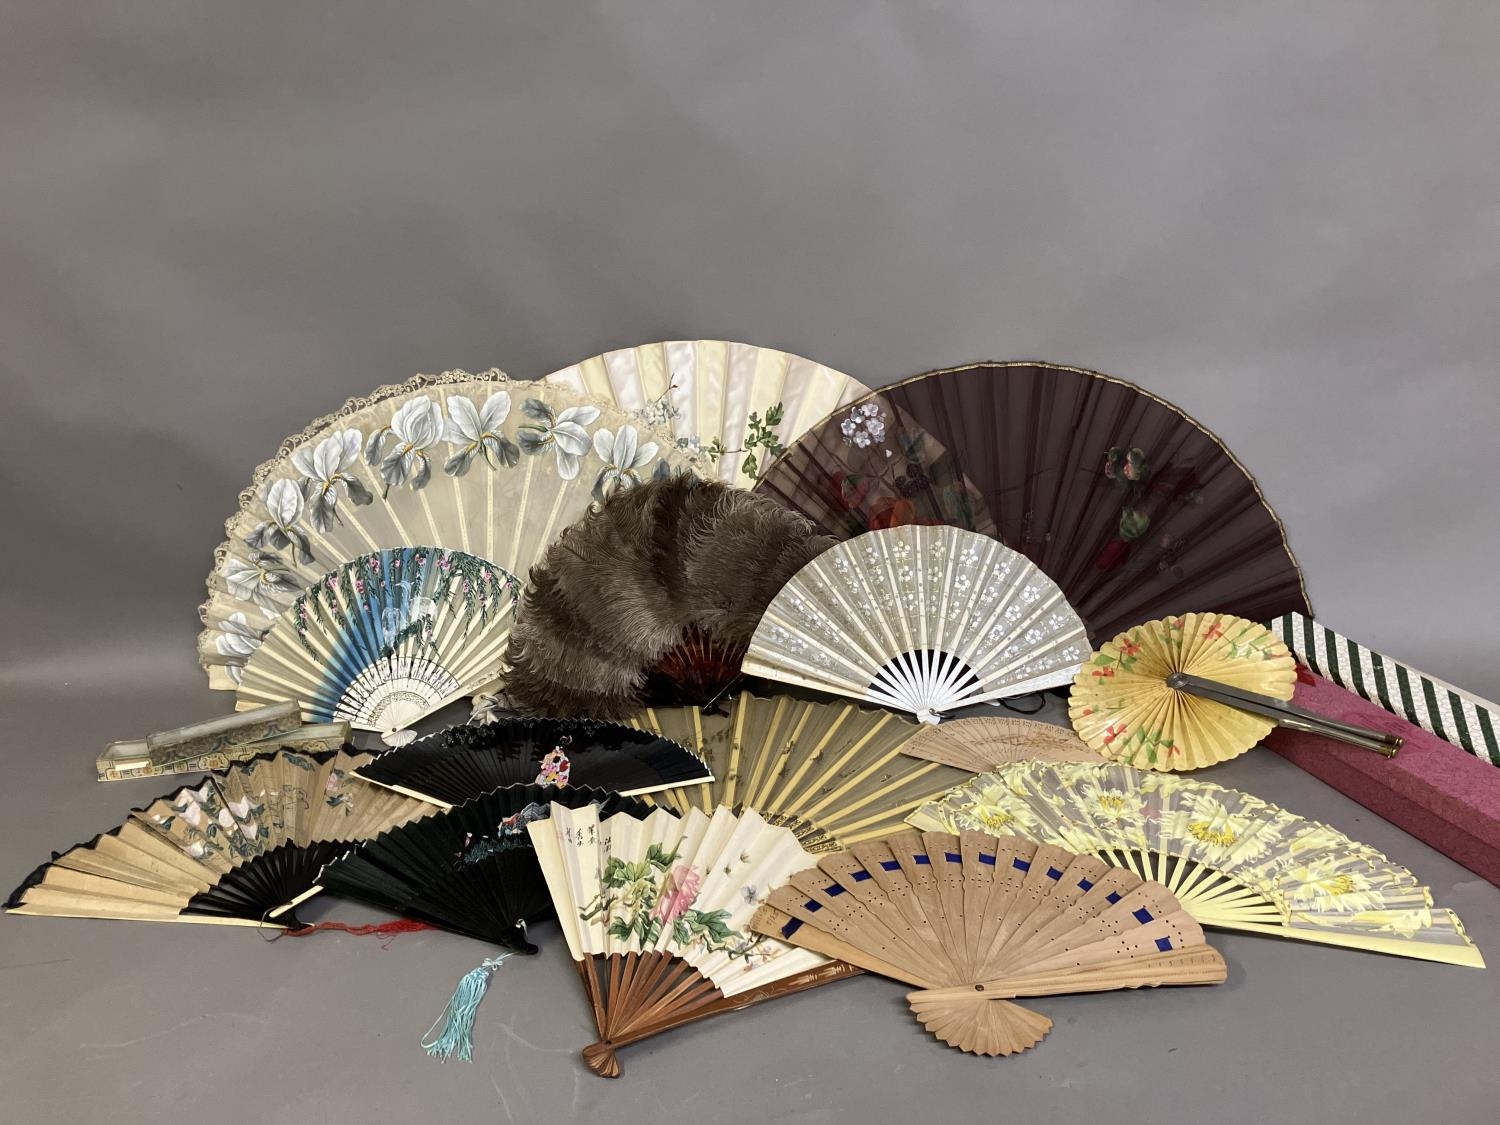 Five c 1890’s fans plus an assortment of tourist and other fans: a large bone fan, the leaf a good